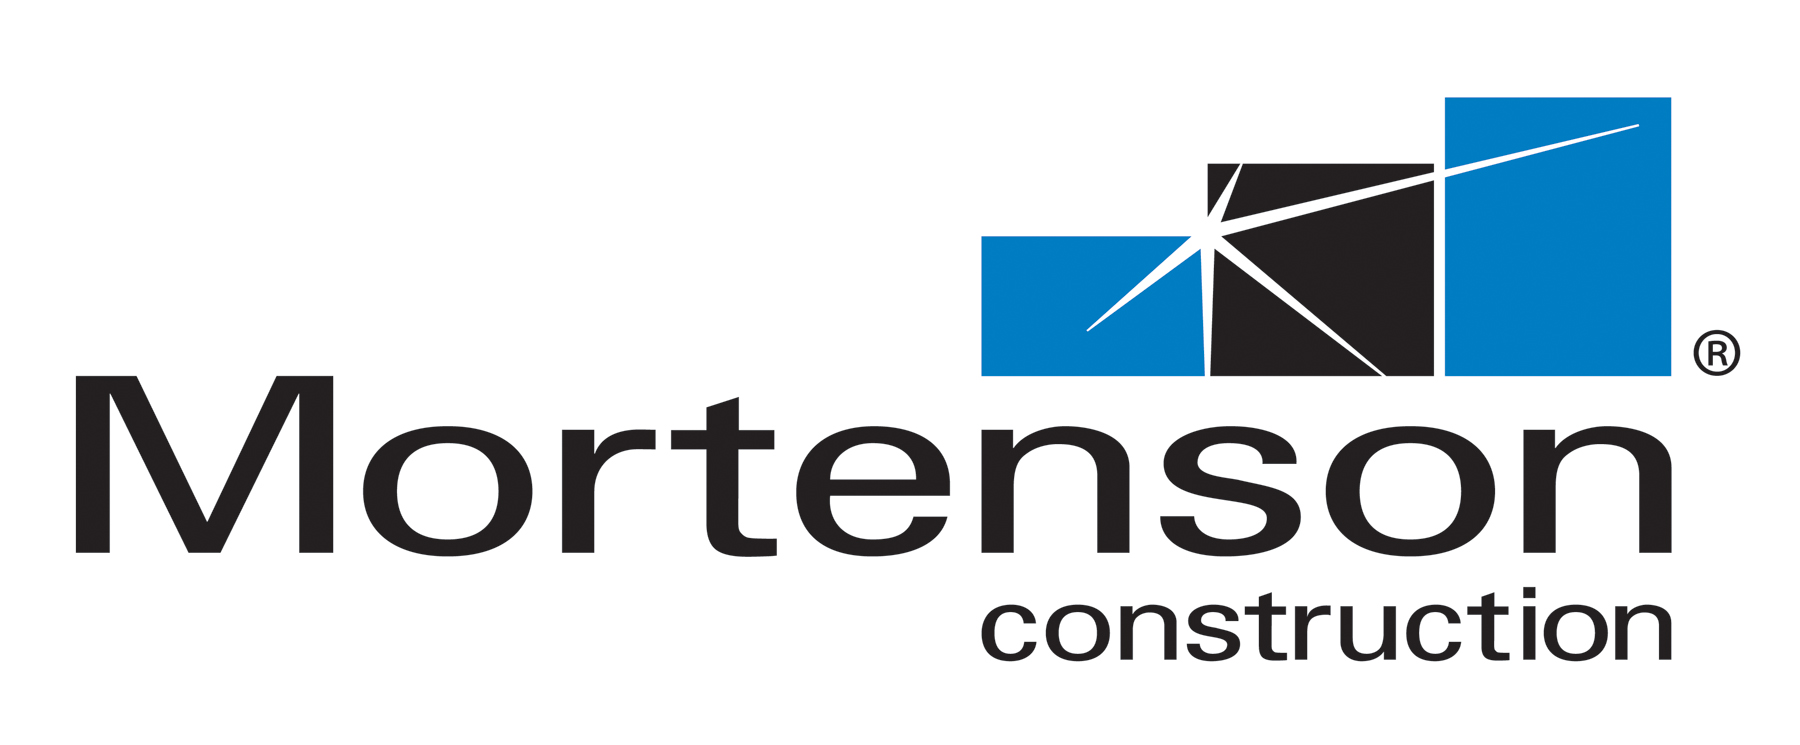 Mortenson-logo.png